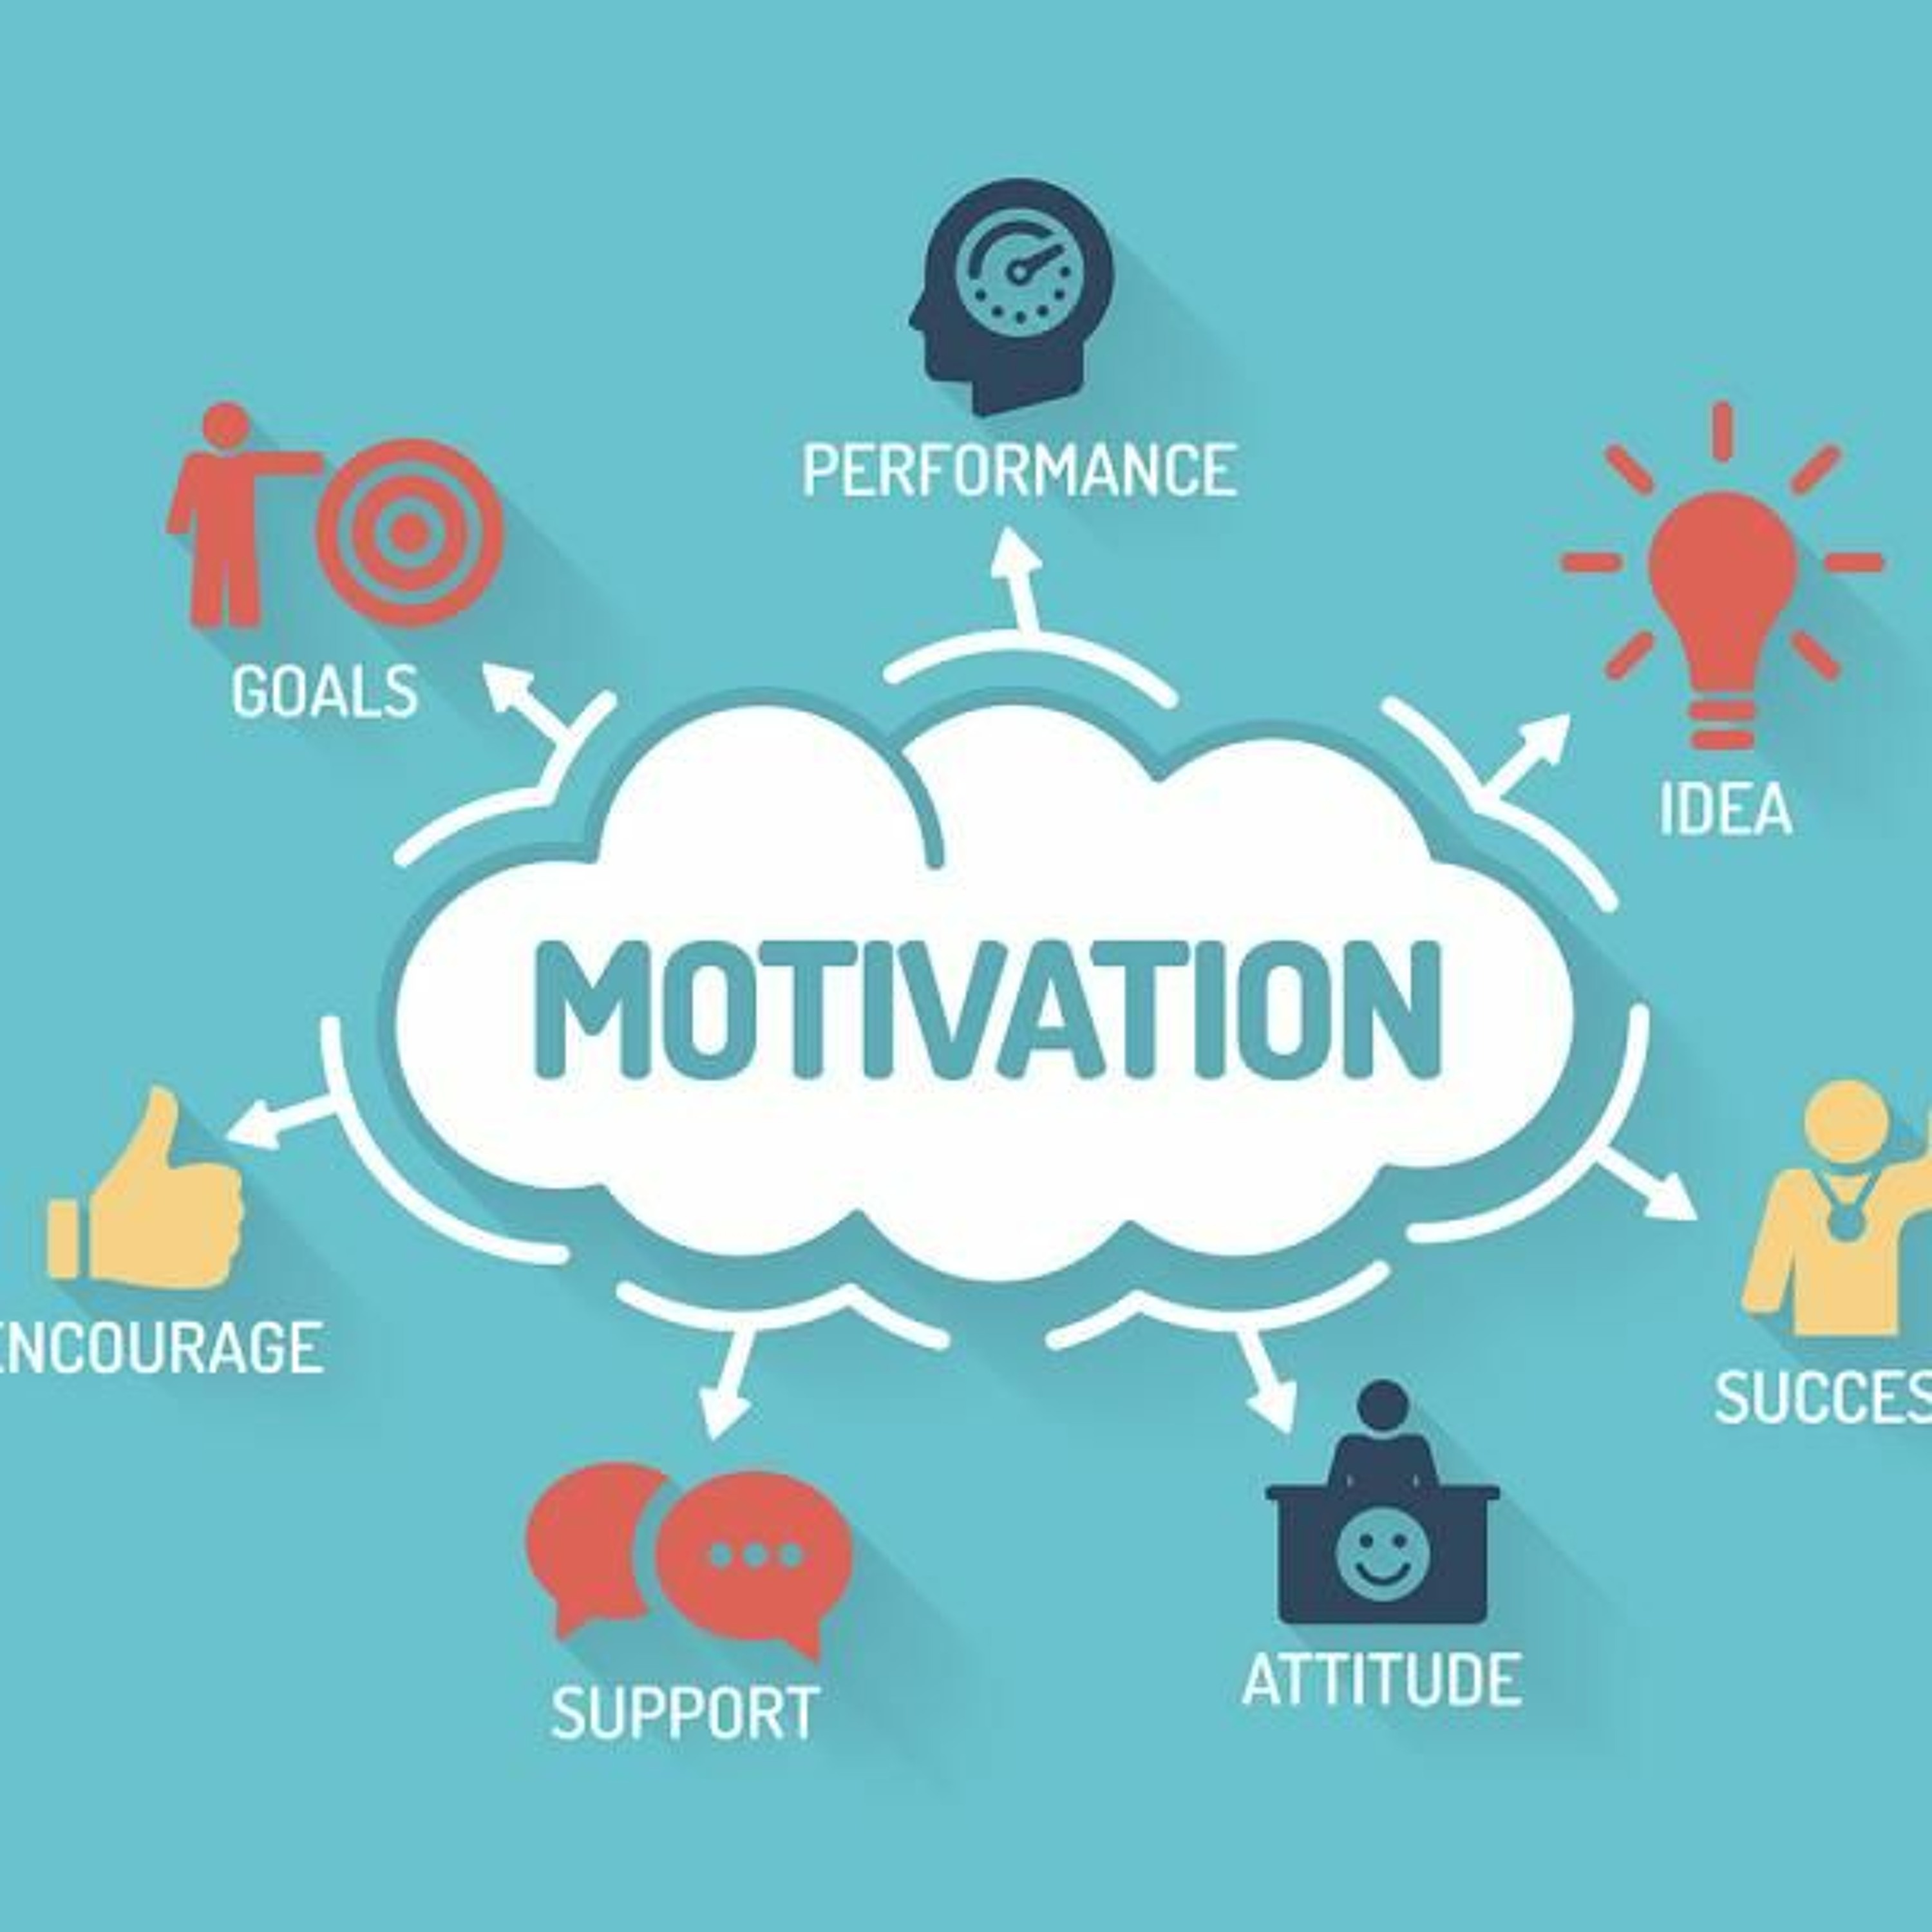 Motivation - Rewards As A Key Factor In Motivation